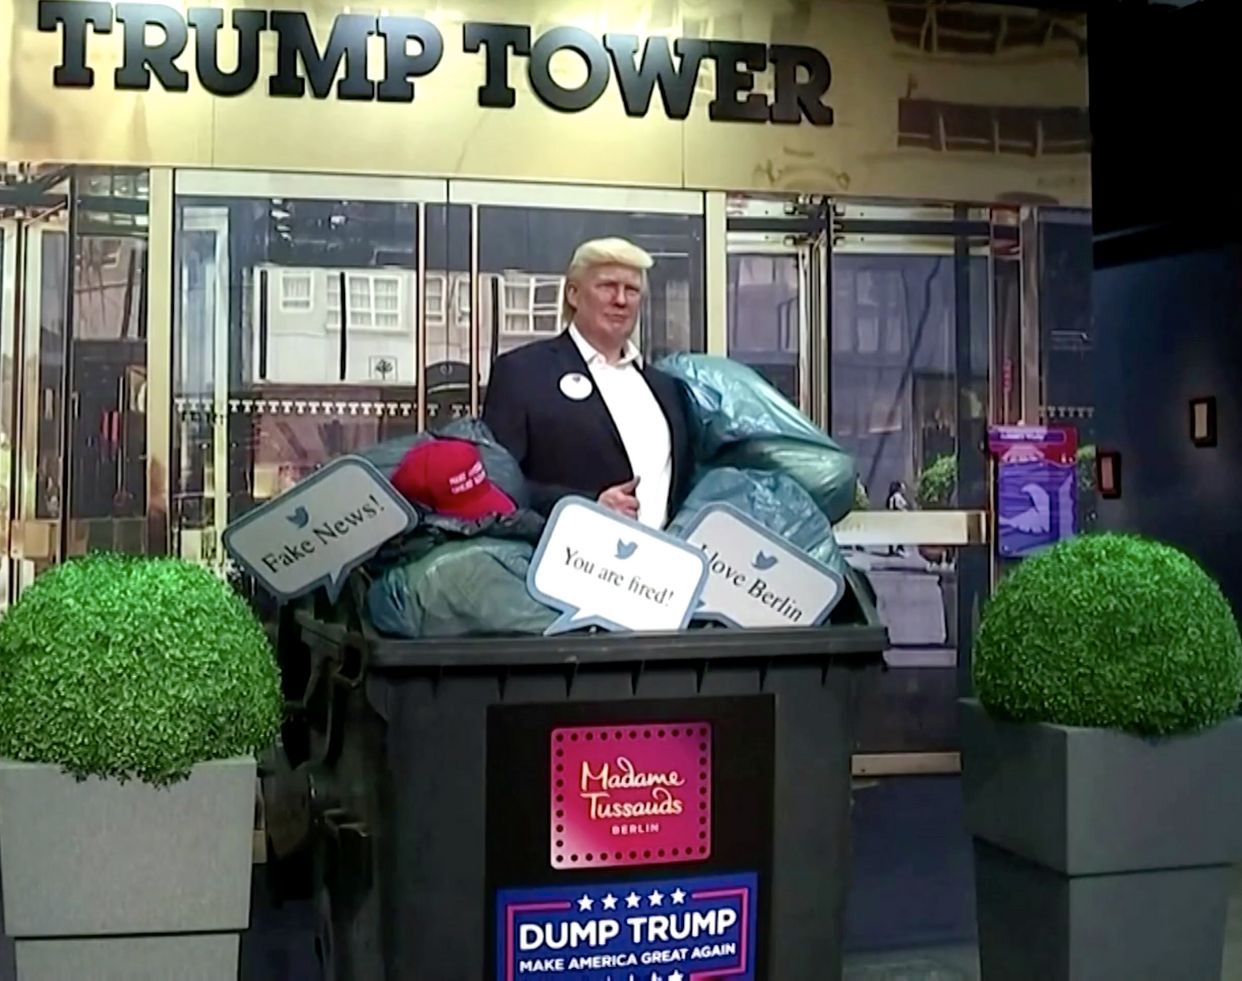 Berlin’s Madame Tussauds Wax Exhibition hall Put Their Donald Trump Sculpture In A Dumpster